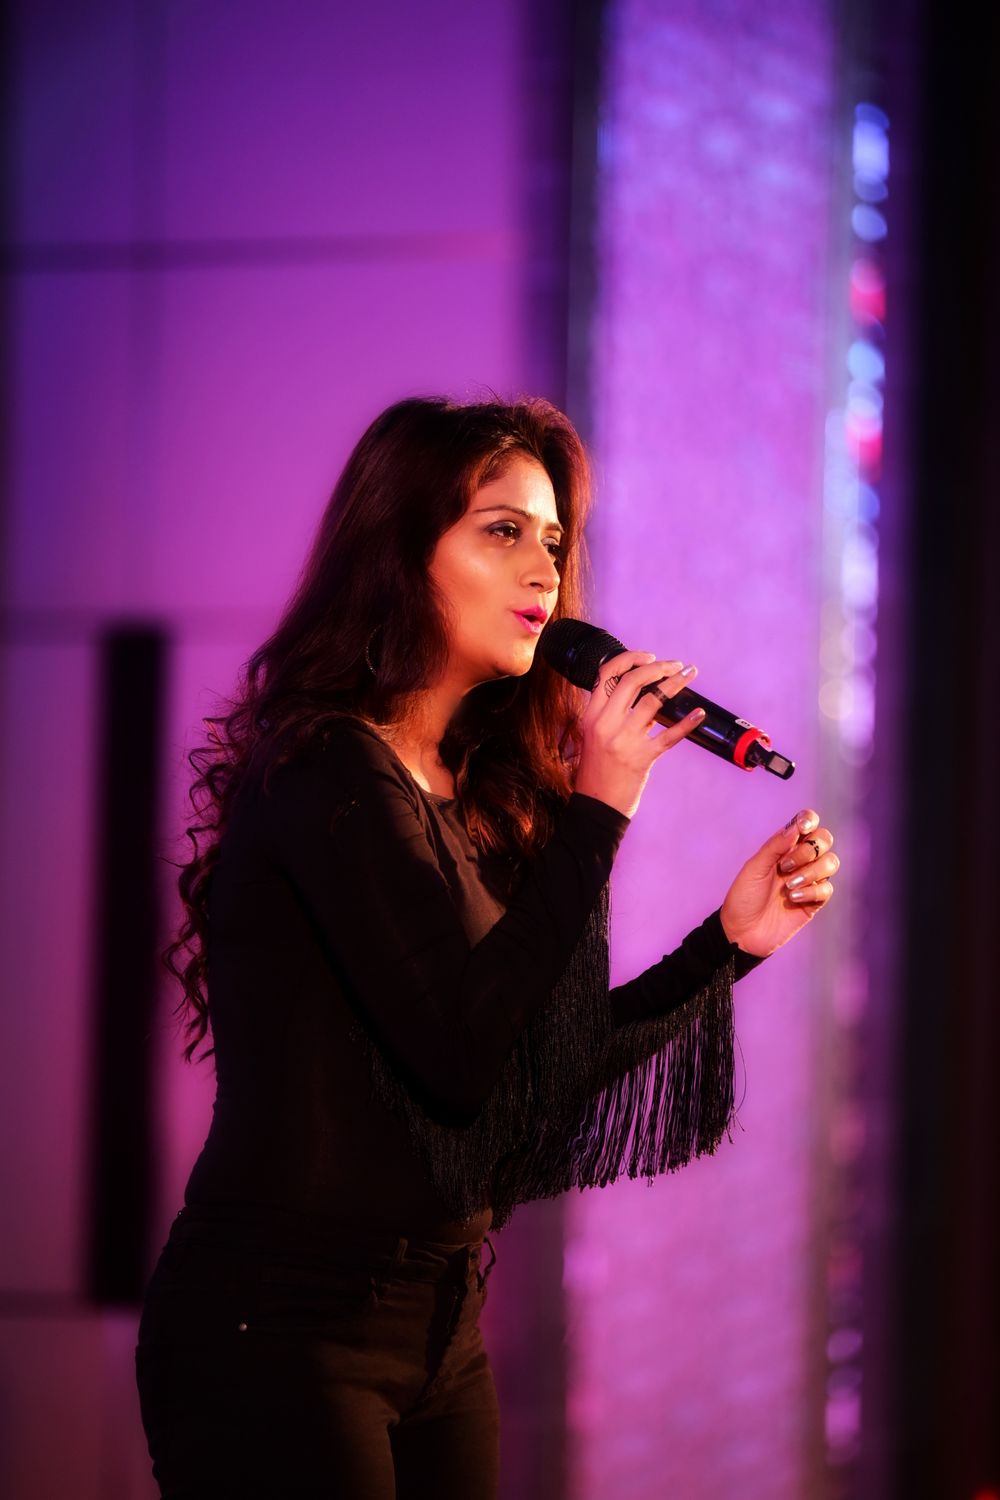 Photo From Live Performance at Sri Lanka - By AnantKiVeena